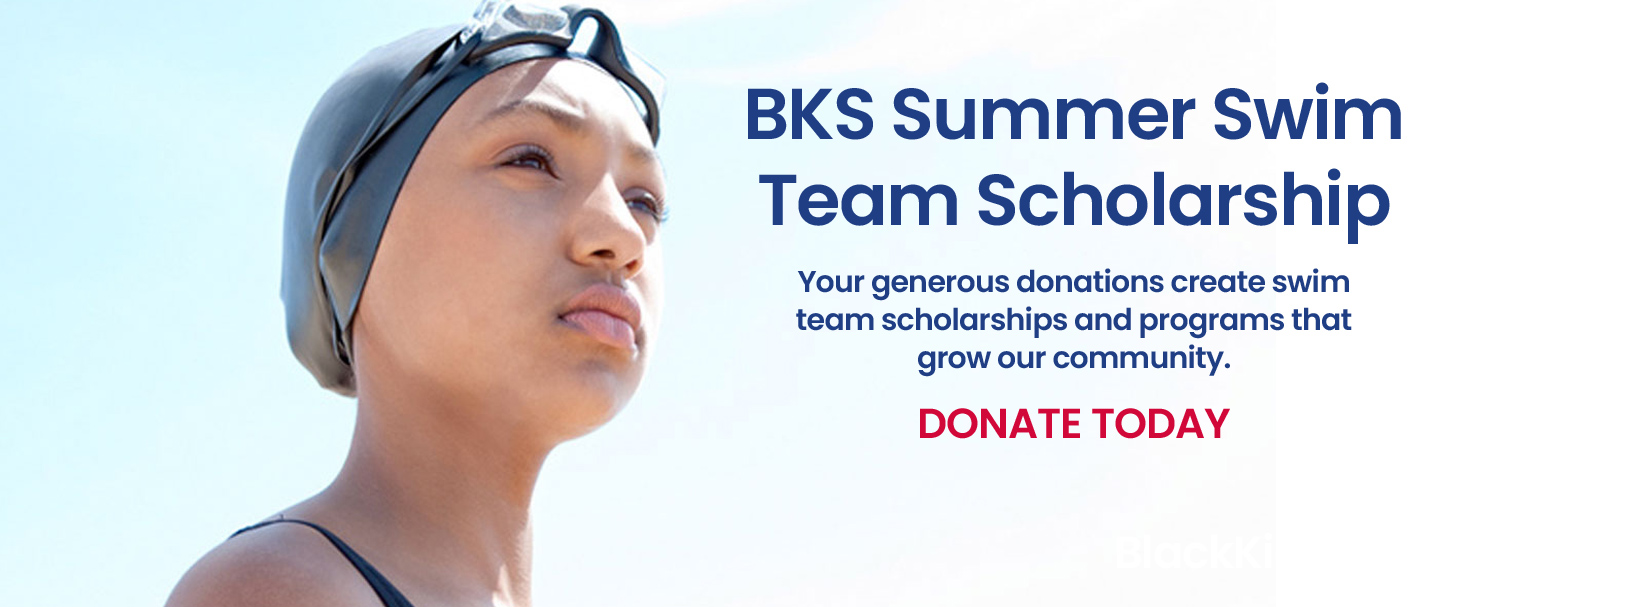 BKS Summer Swim Team Scholarship